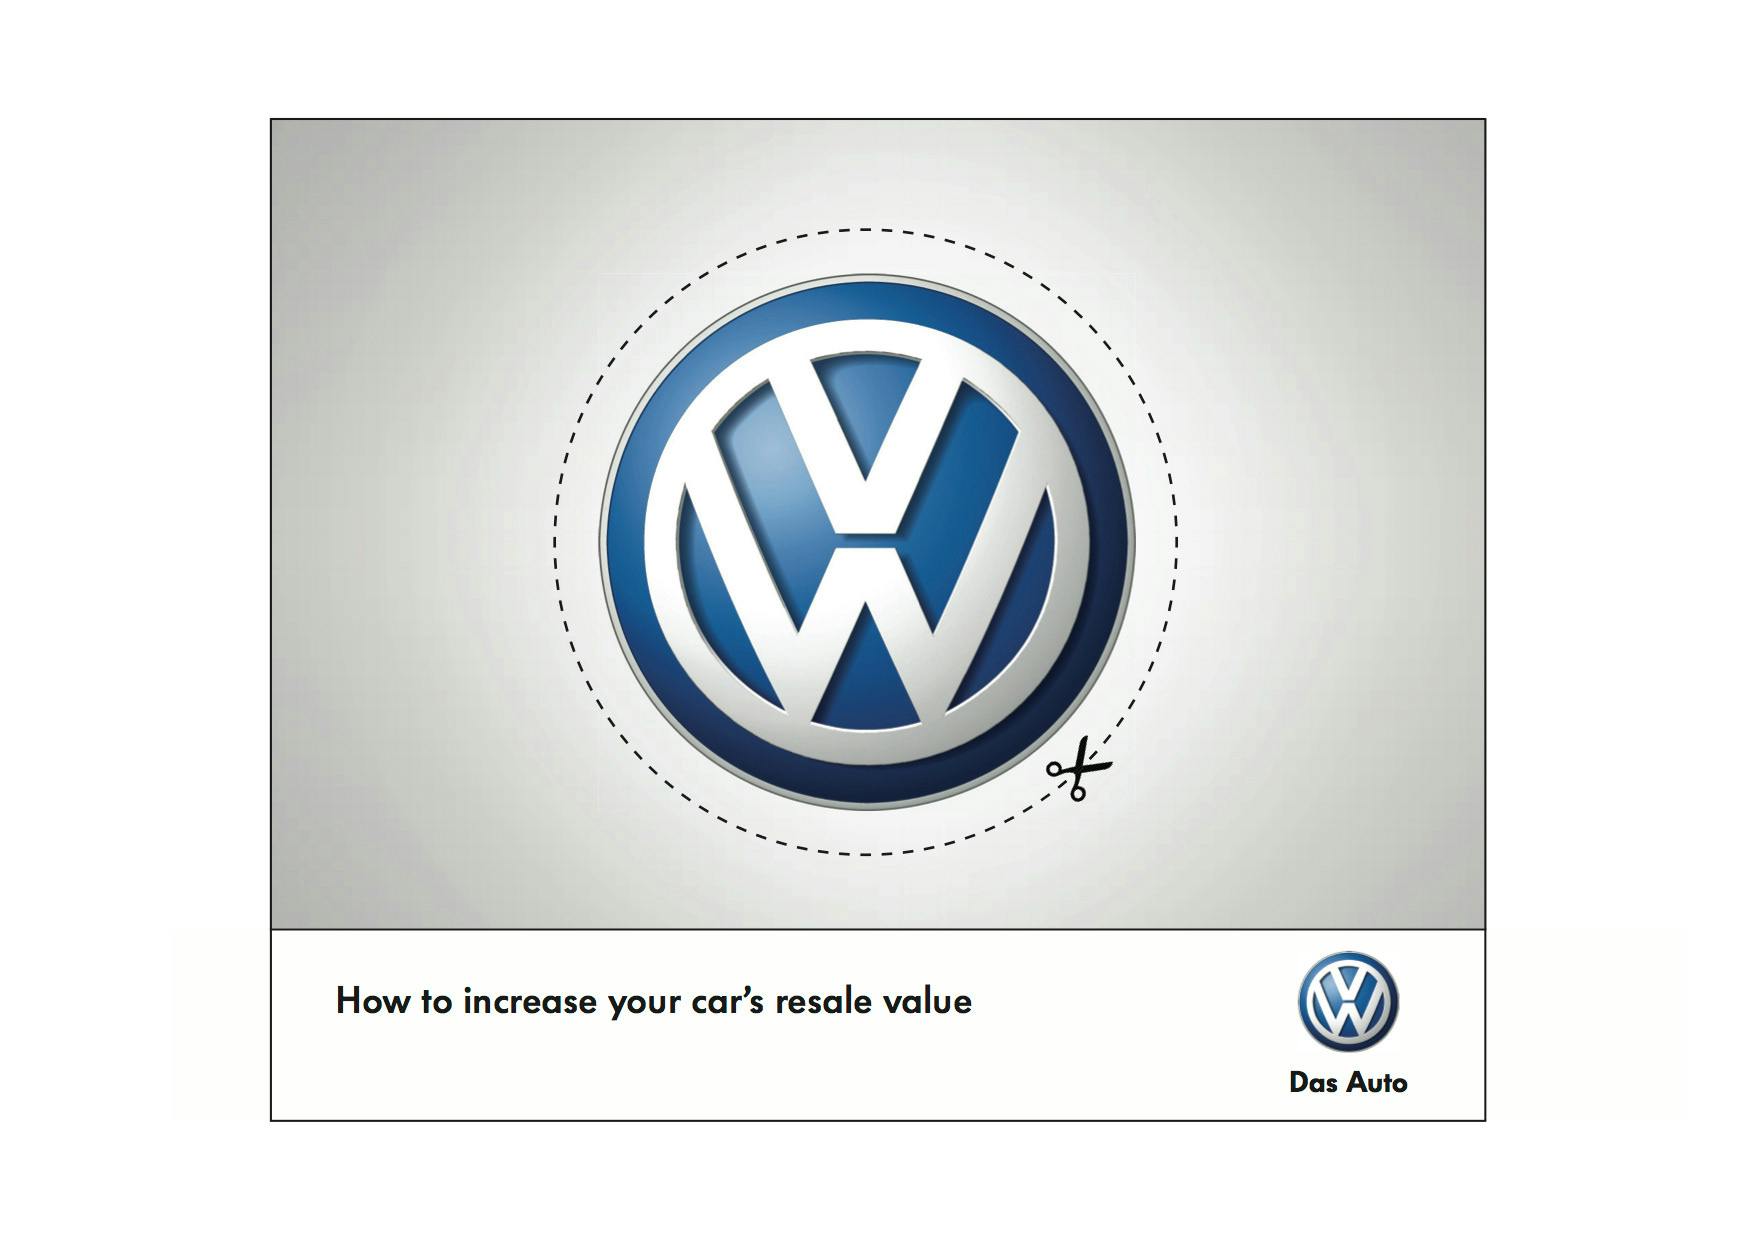 VW logo with a cutout line around it